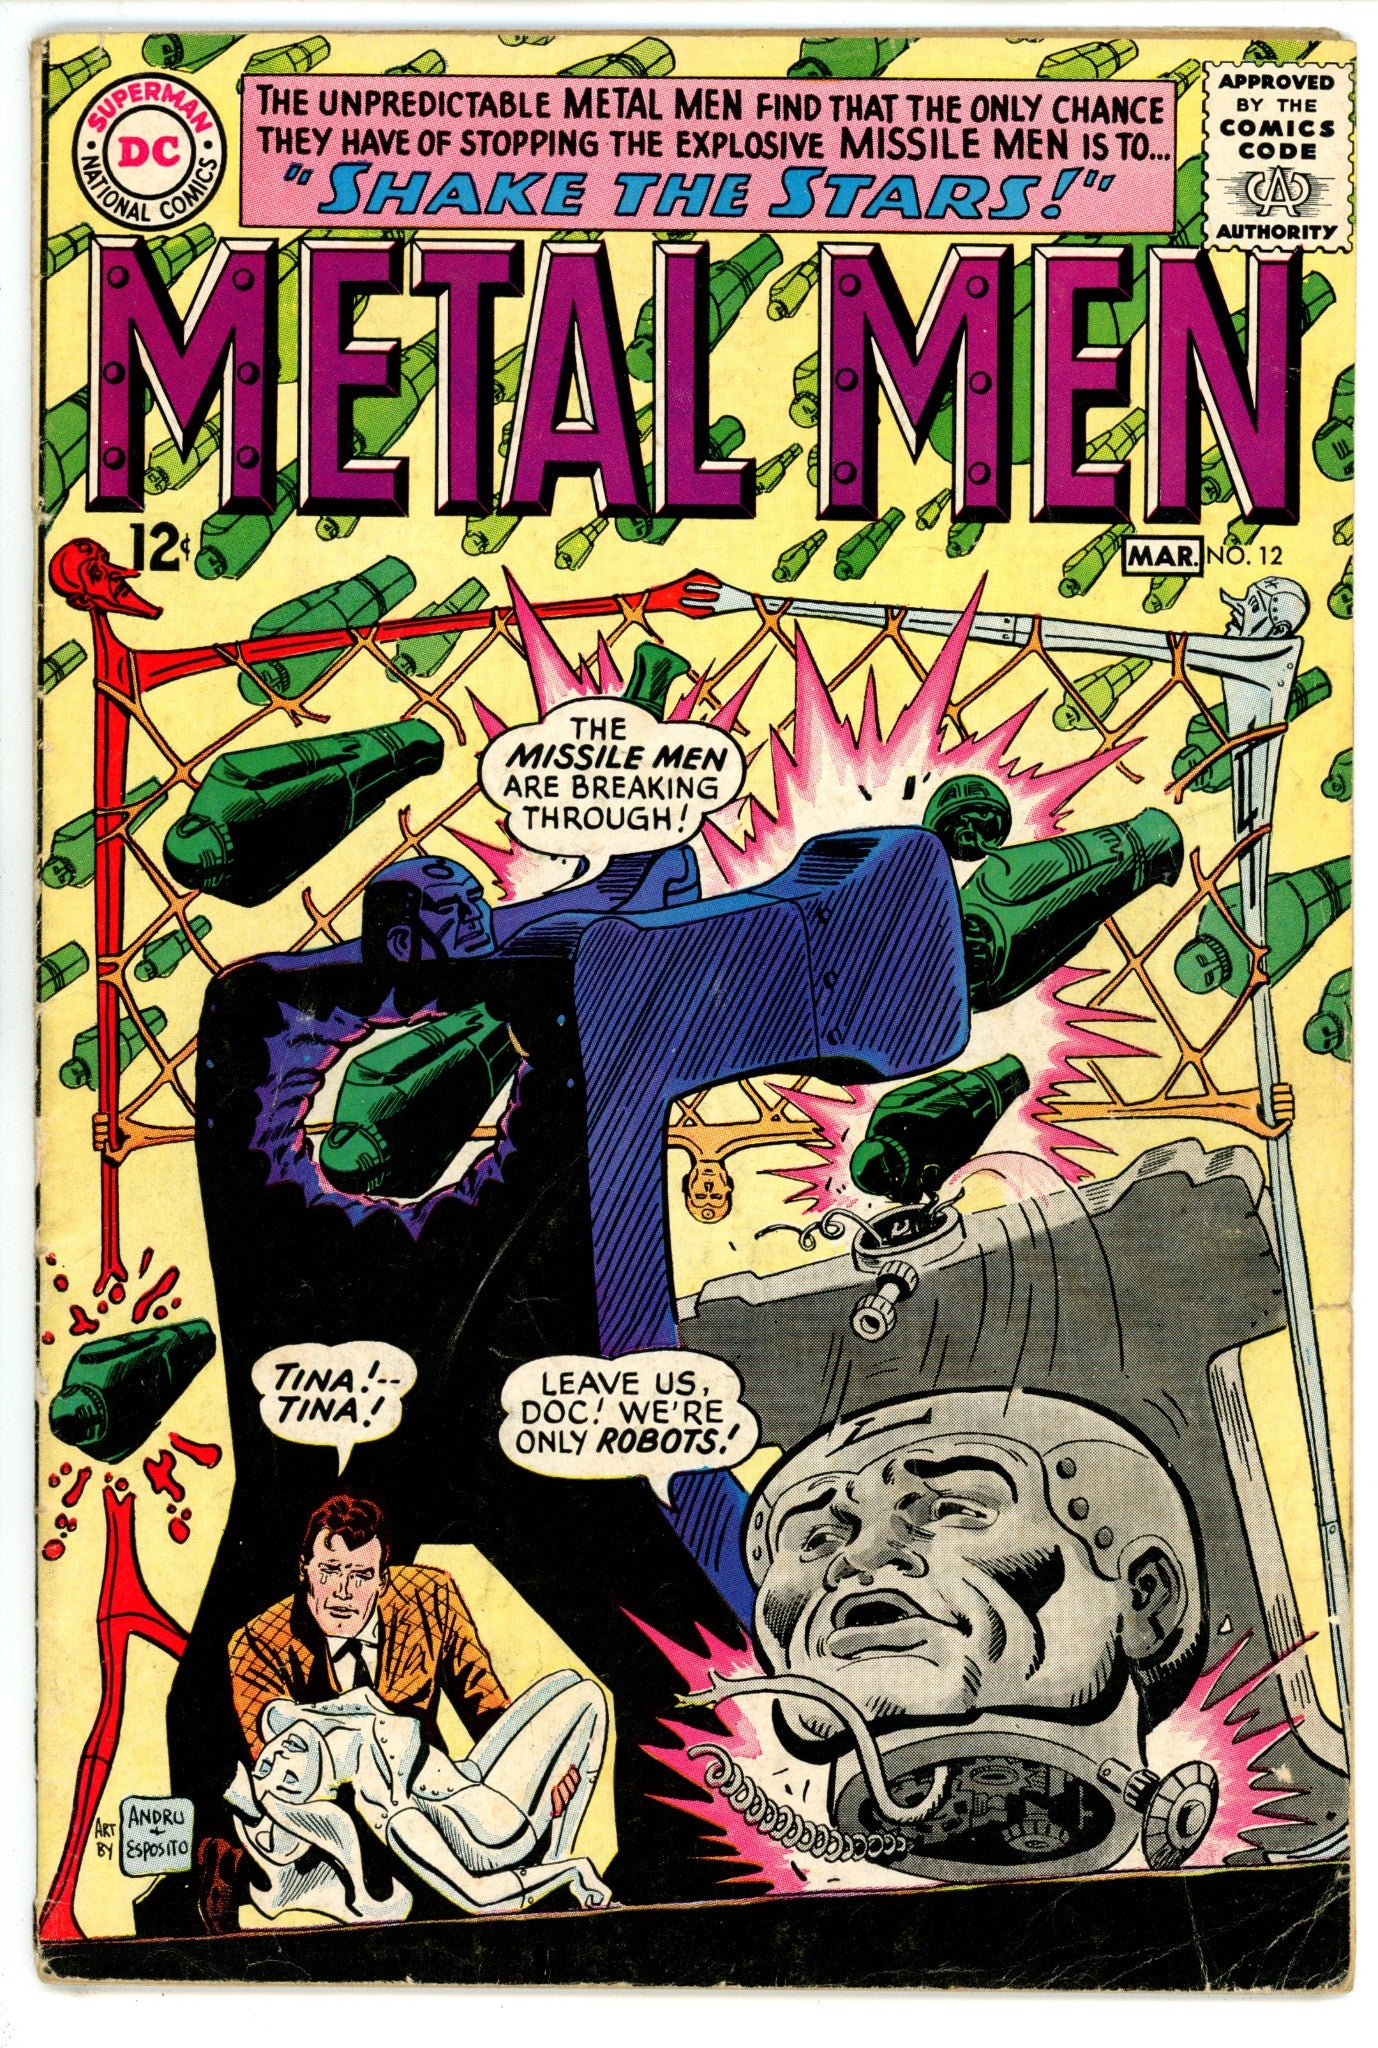 Metal Men Vol 1 12 VG- (3.5) (1965) 